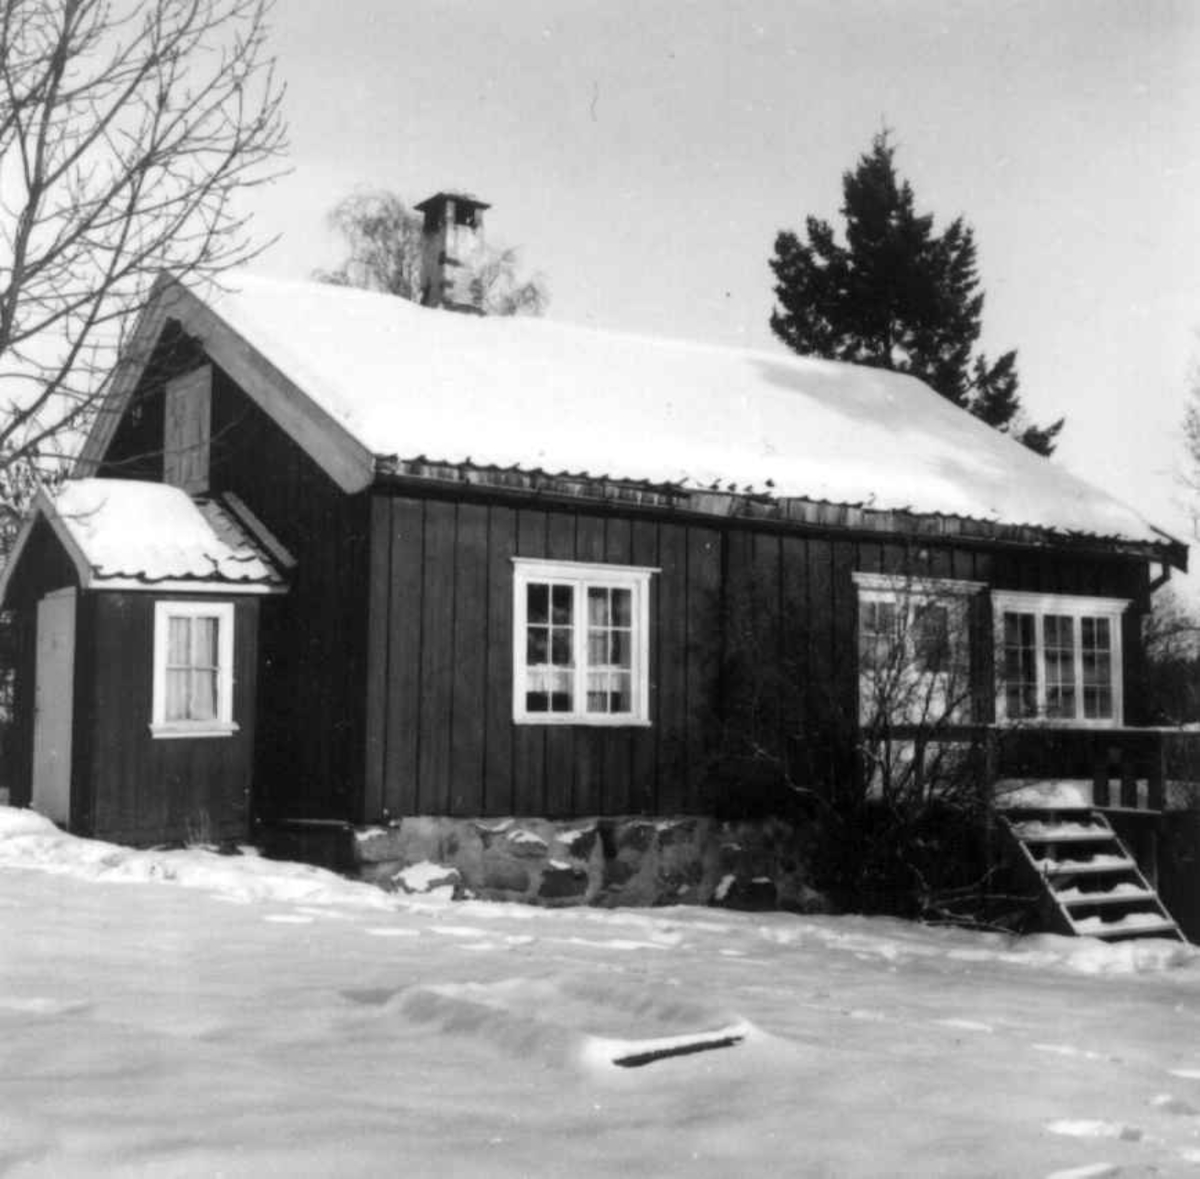 Syverstad, Asker, Akershus. Stua i Hesthagen. Lite hus, vinterbilde.